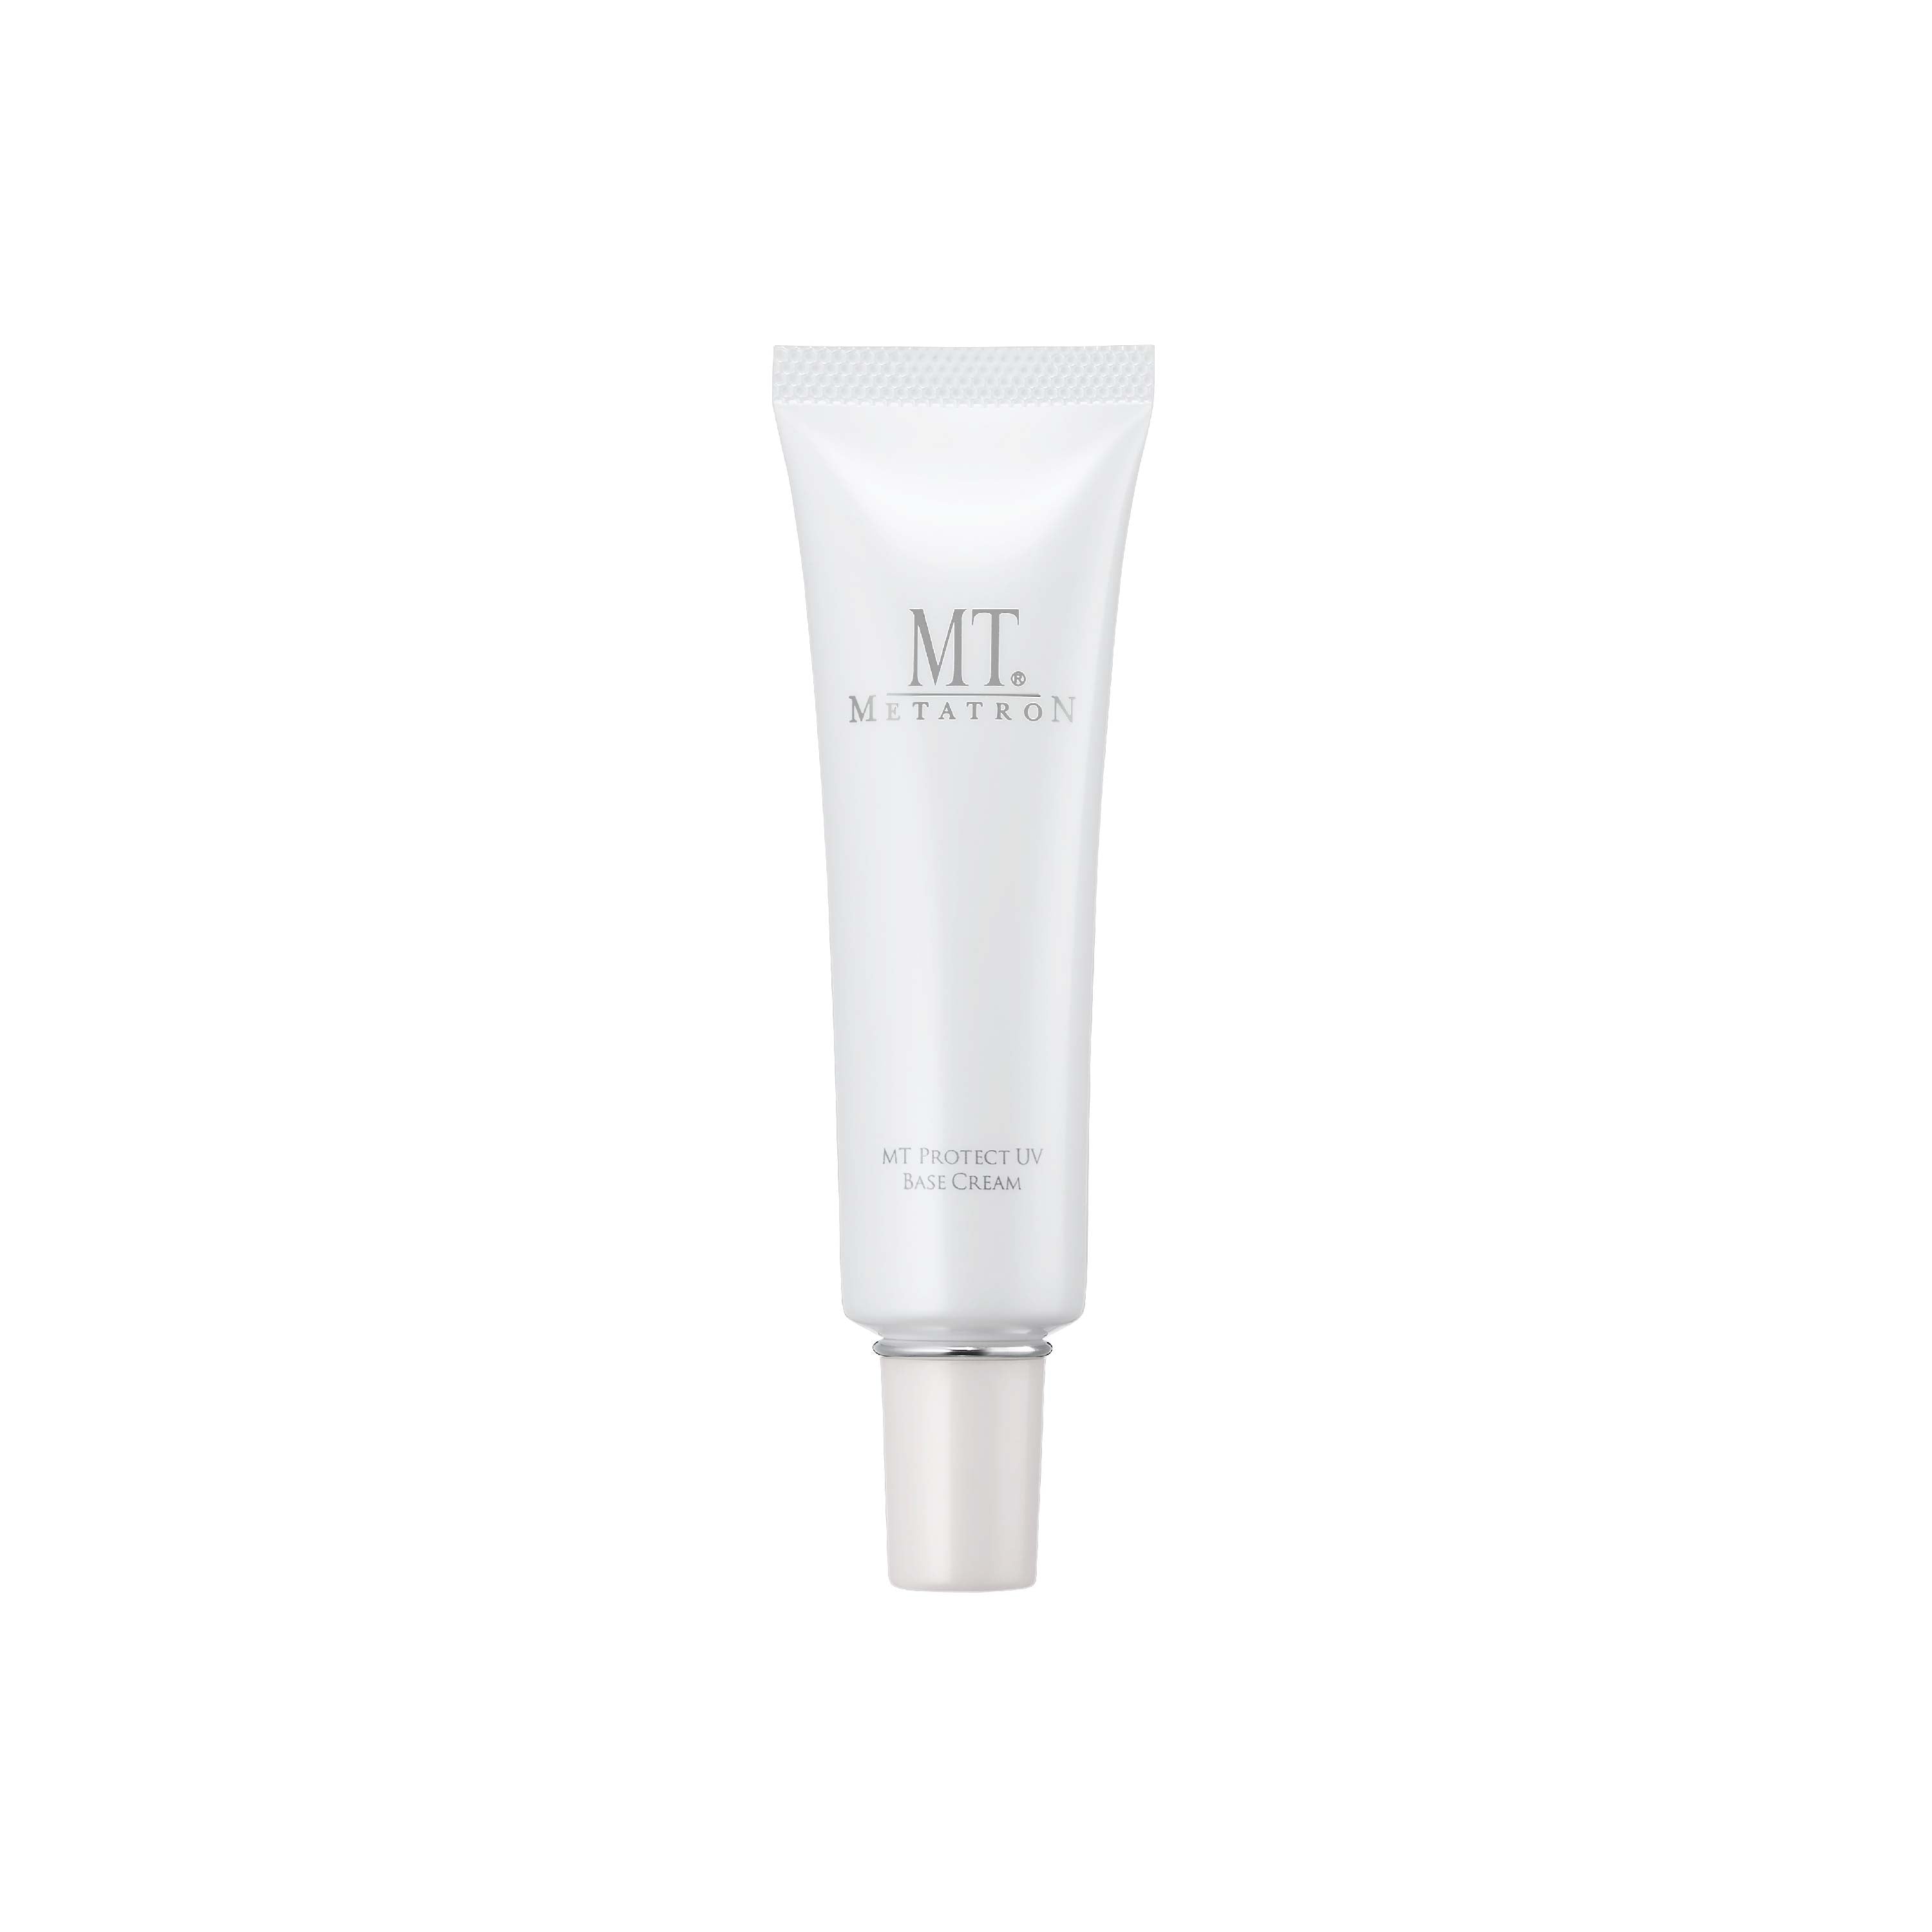 MT SPF 26 PA++, Protect UV Base Cream (makeup base cream) 1.0 FL OZ(30mL)